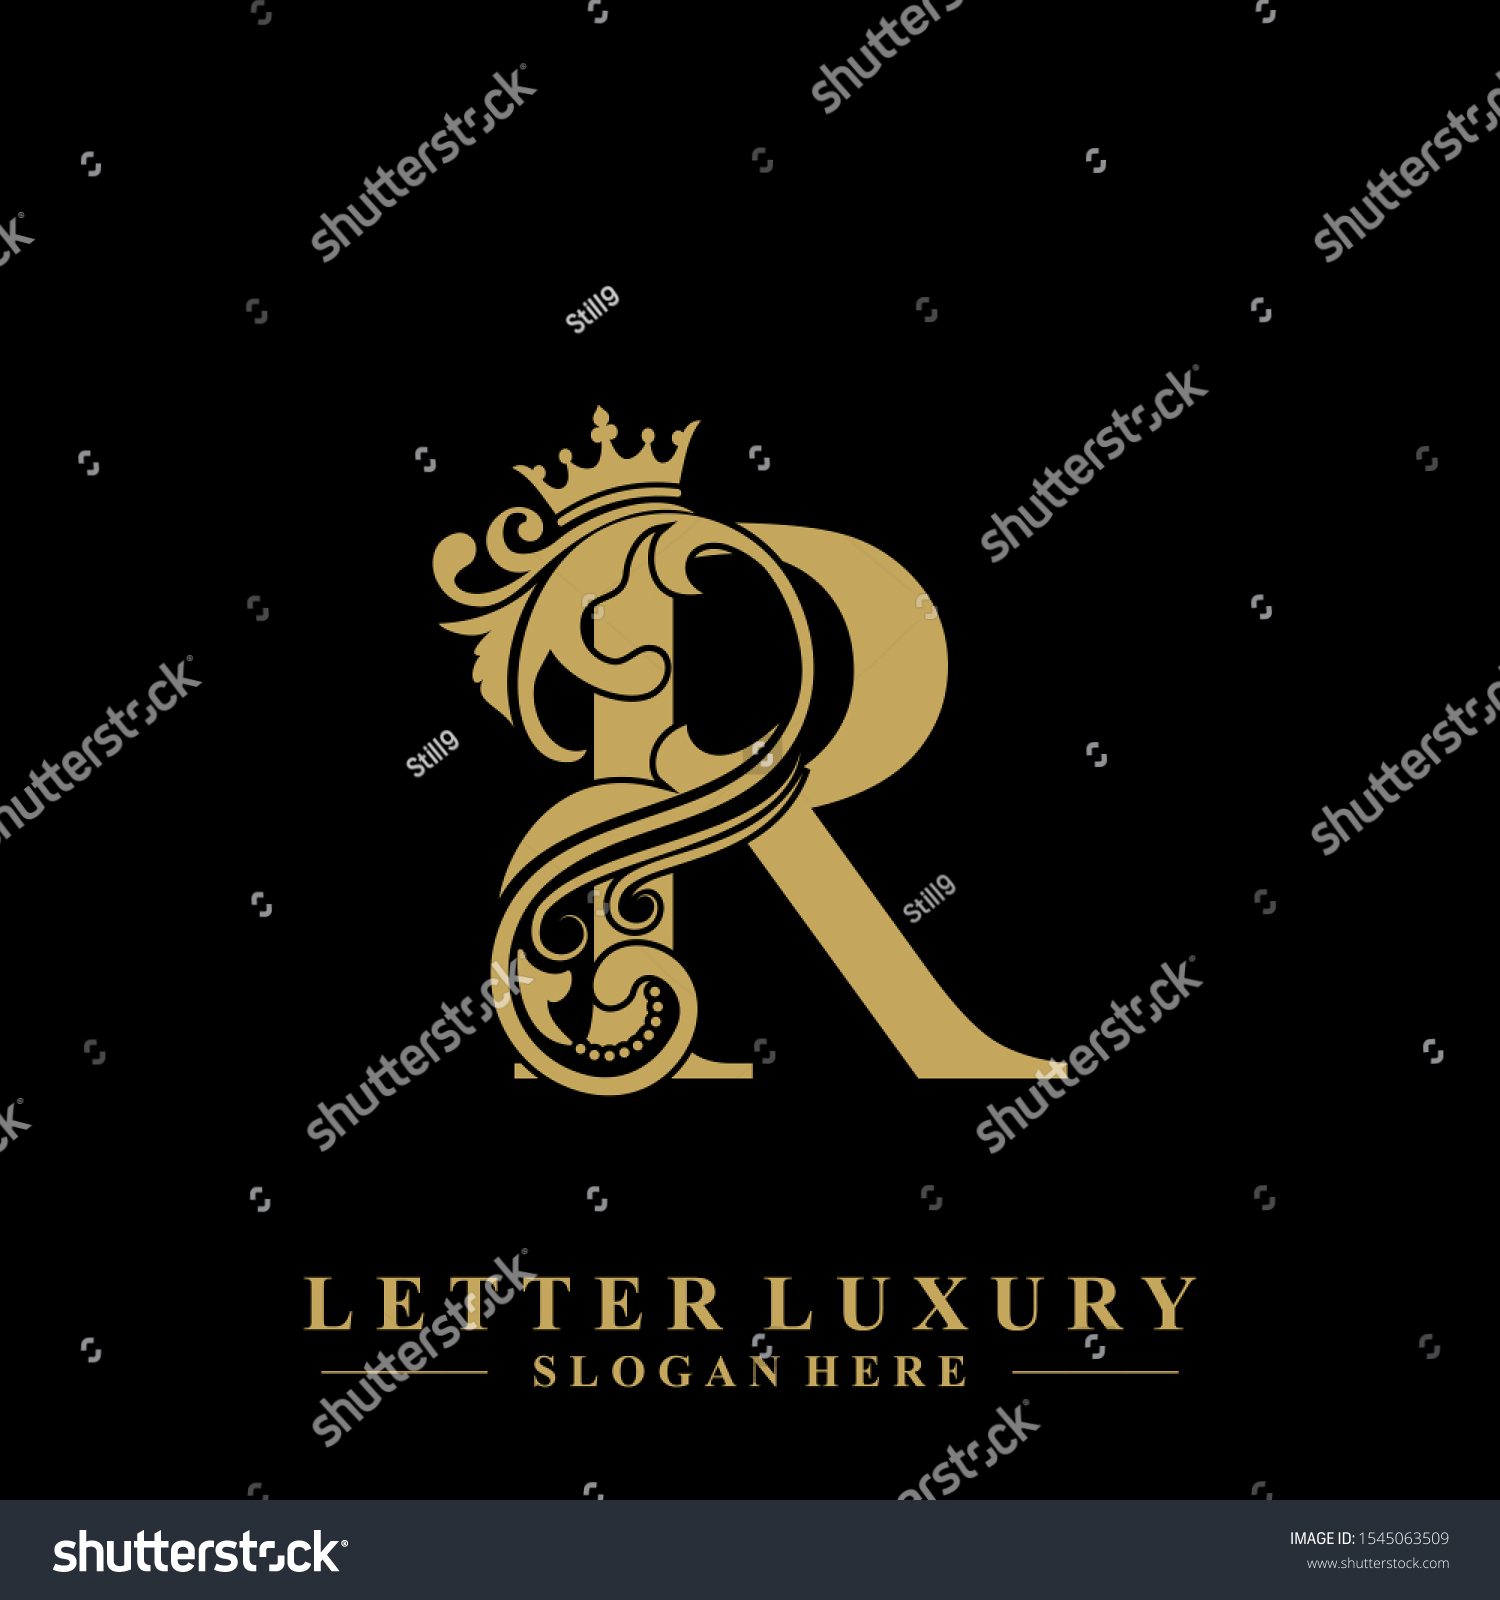 Initial Letter R Luxury Beauty Flourishes เวกเตอรสตอก ปลอดคาลขสทธ